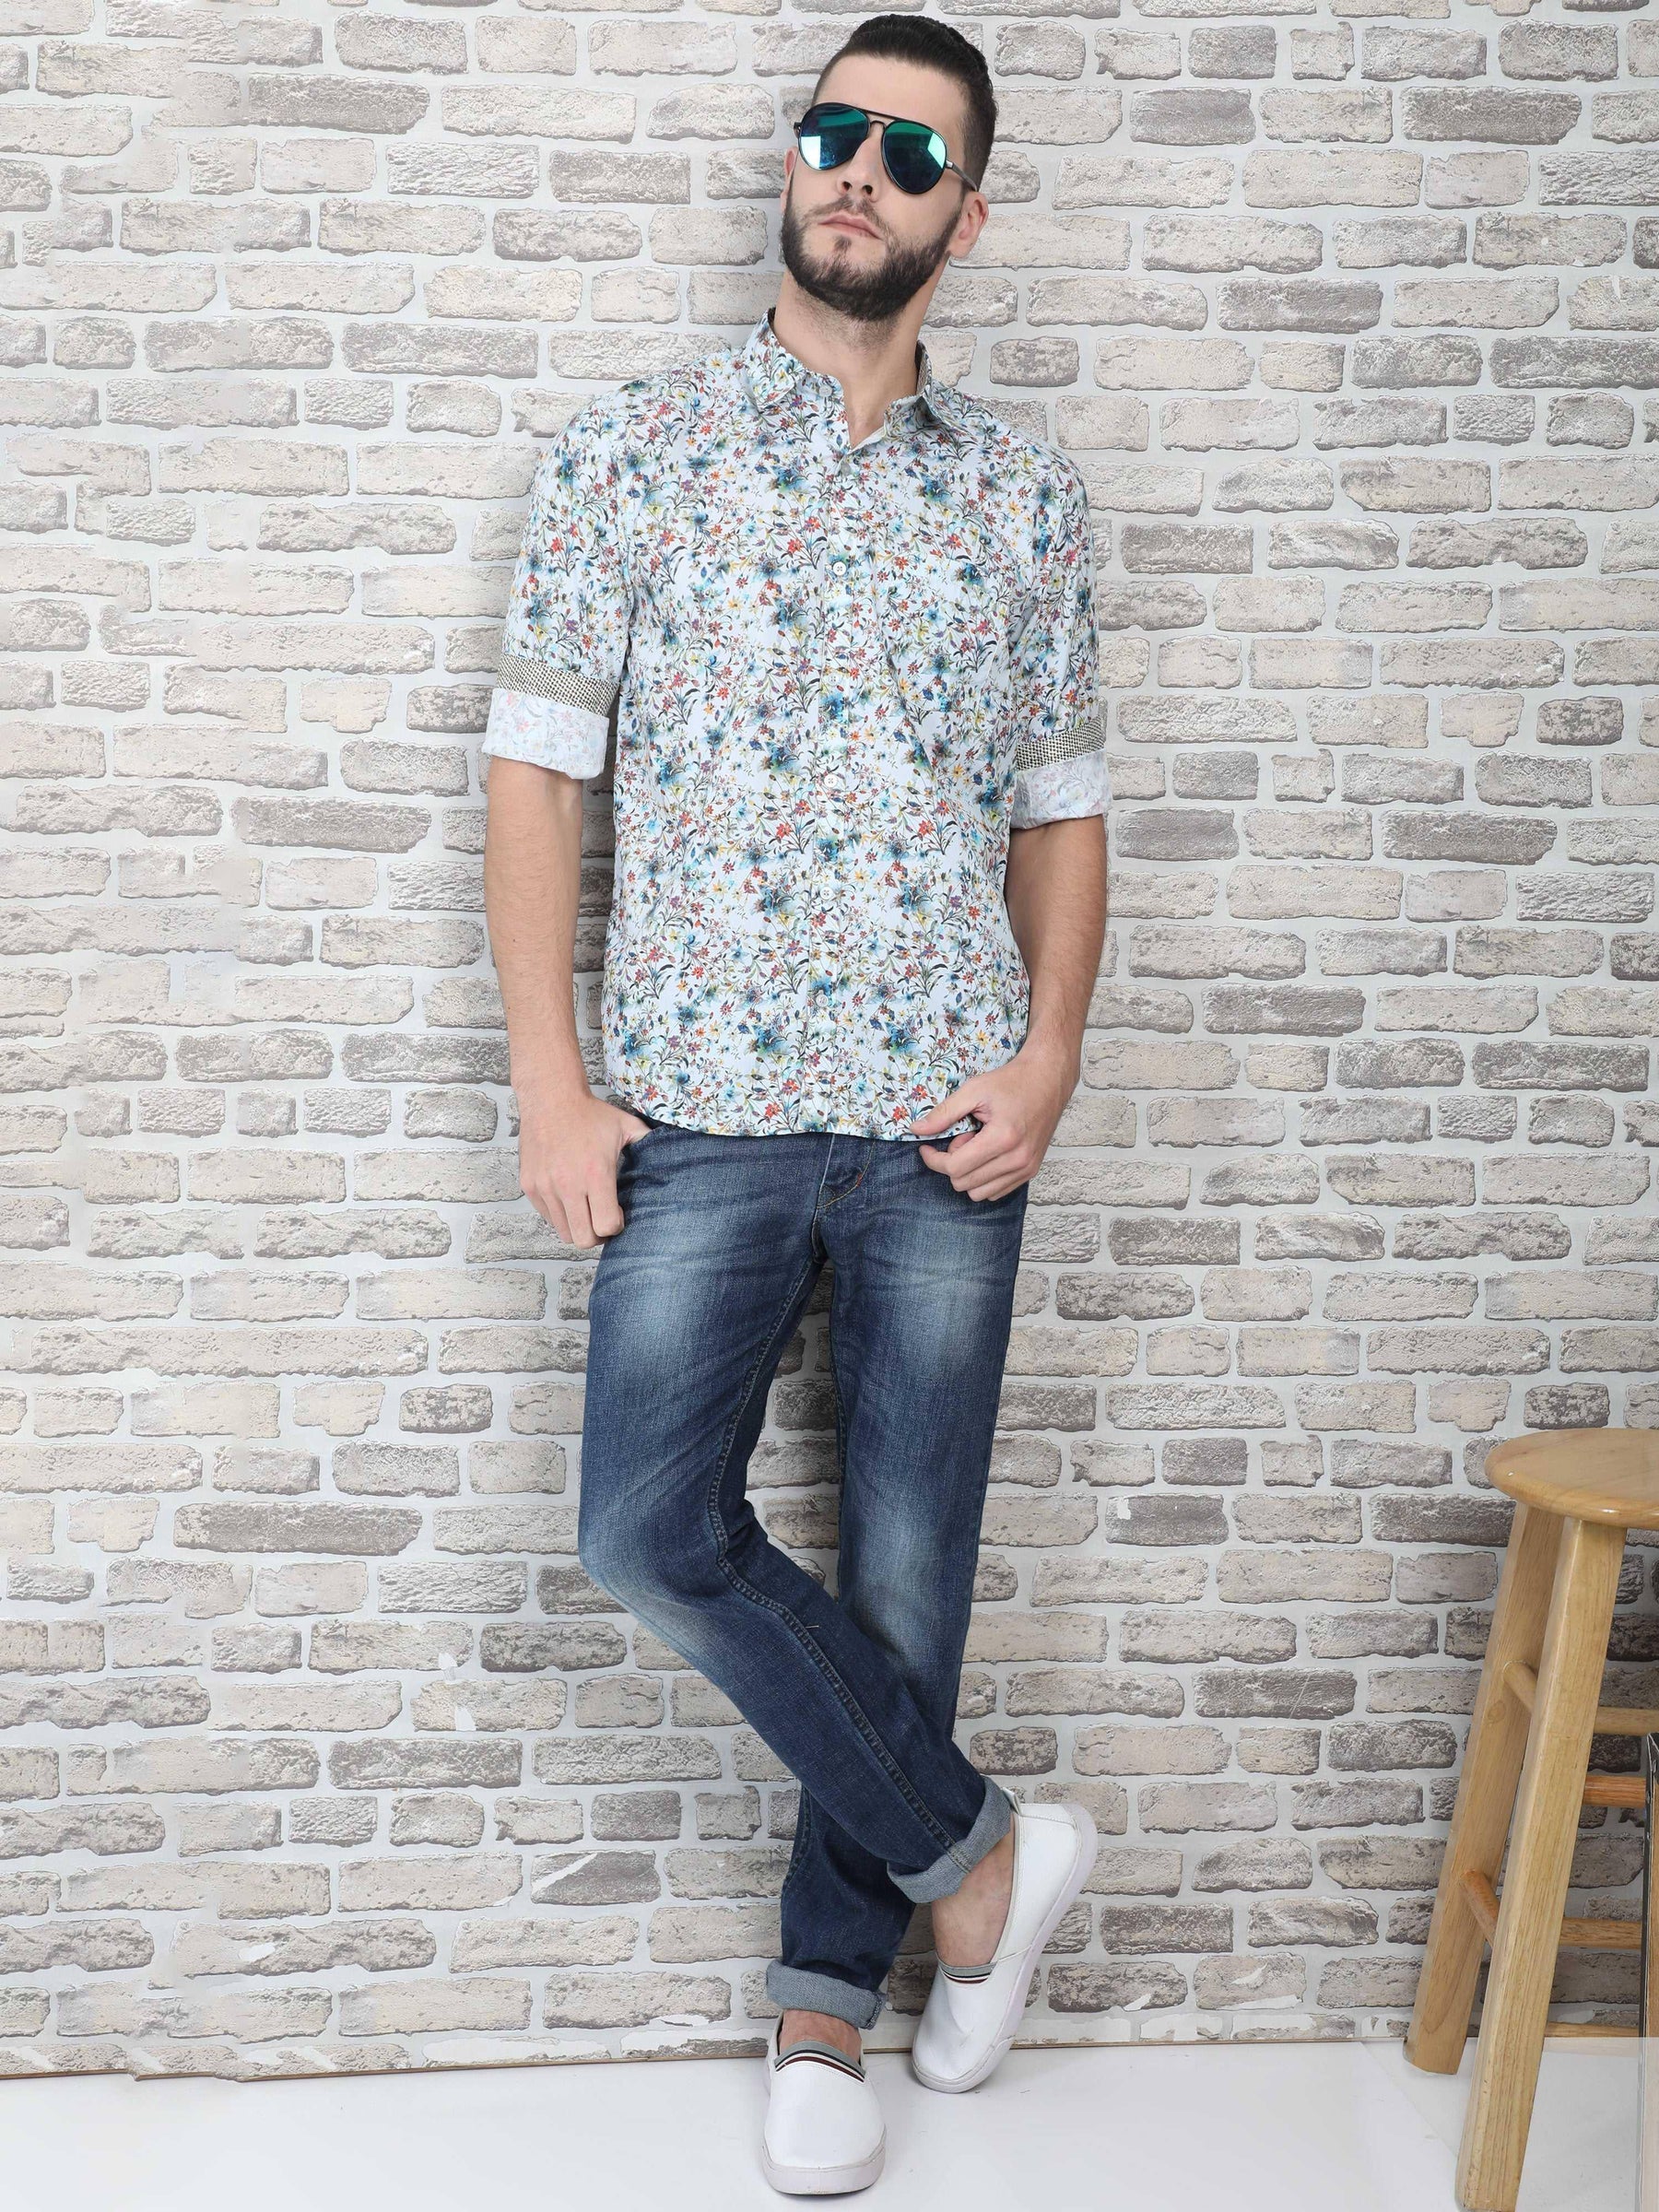 Reuben Men's Floral Casual Shirt - Guniaa Fashions